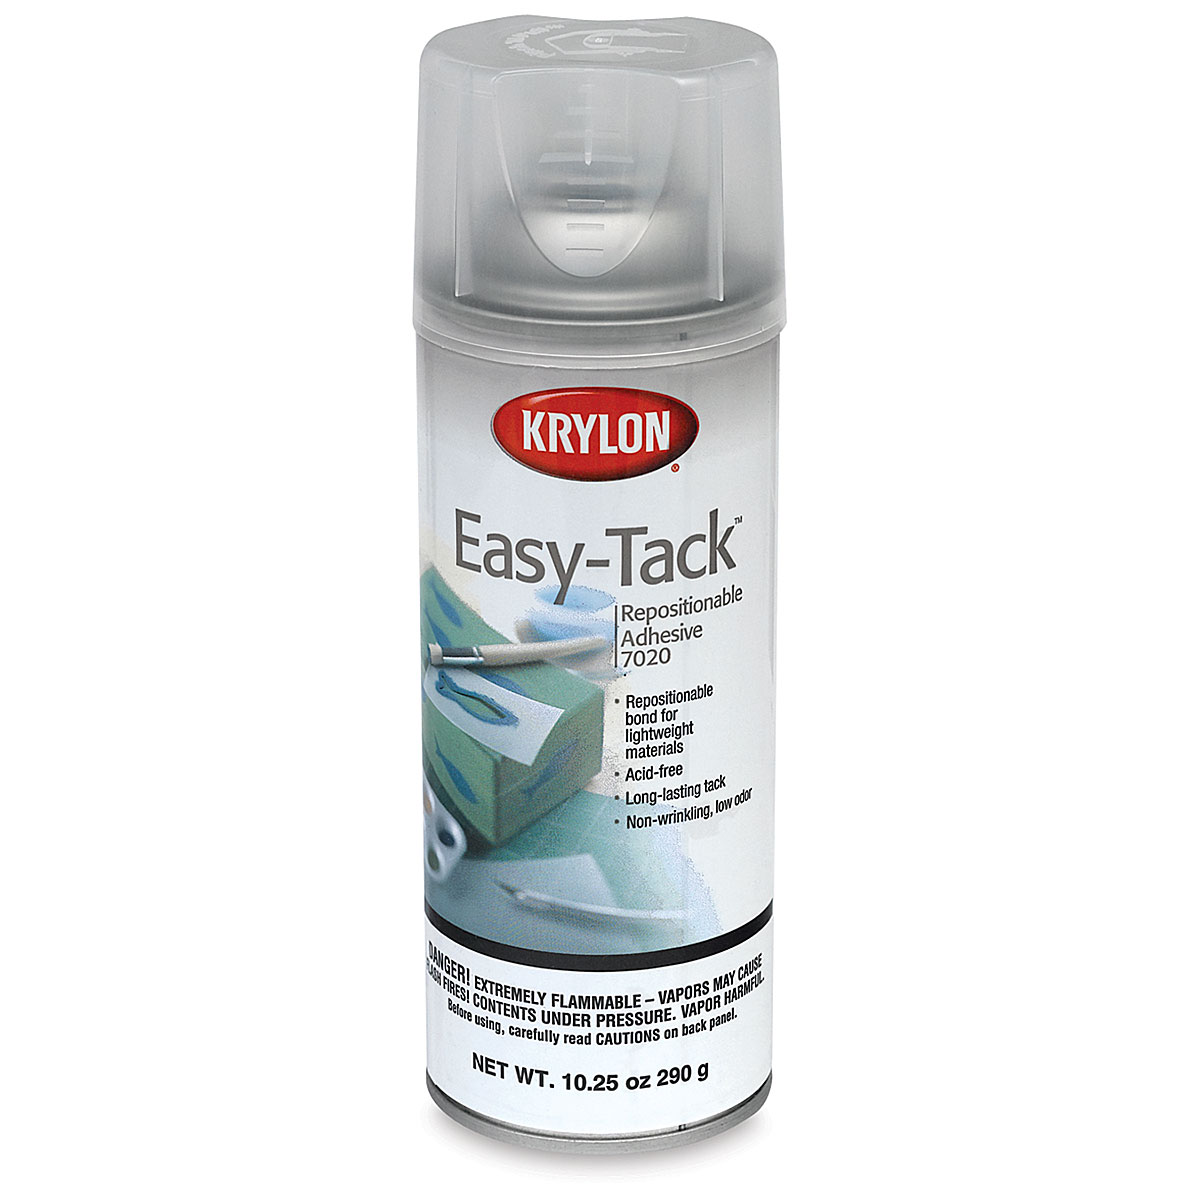 Krylon - Easy-Tack Repositionable Adhesive - 10.25 oz. - Sam Flax Atlanta